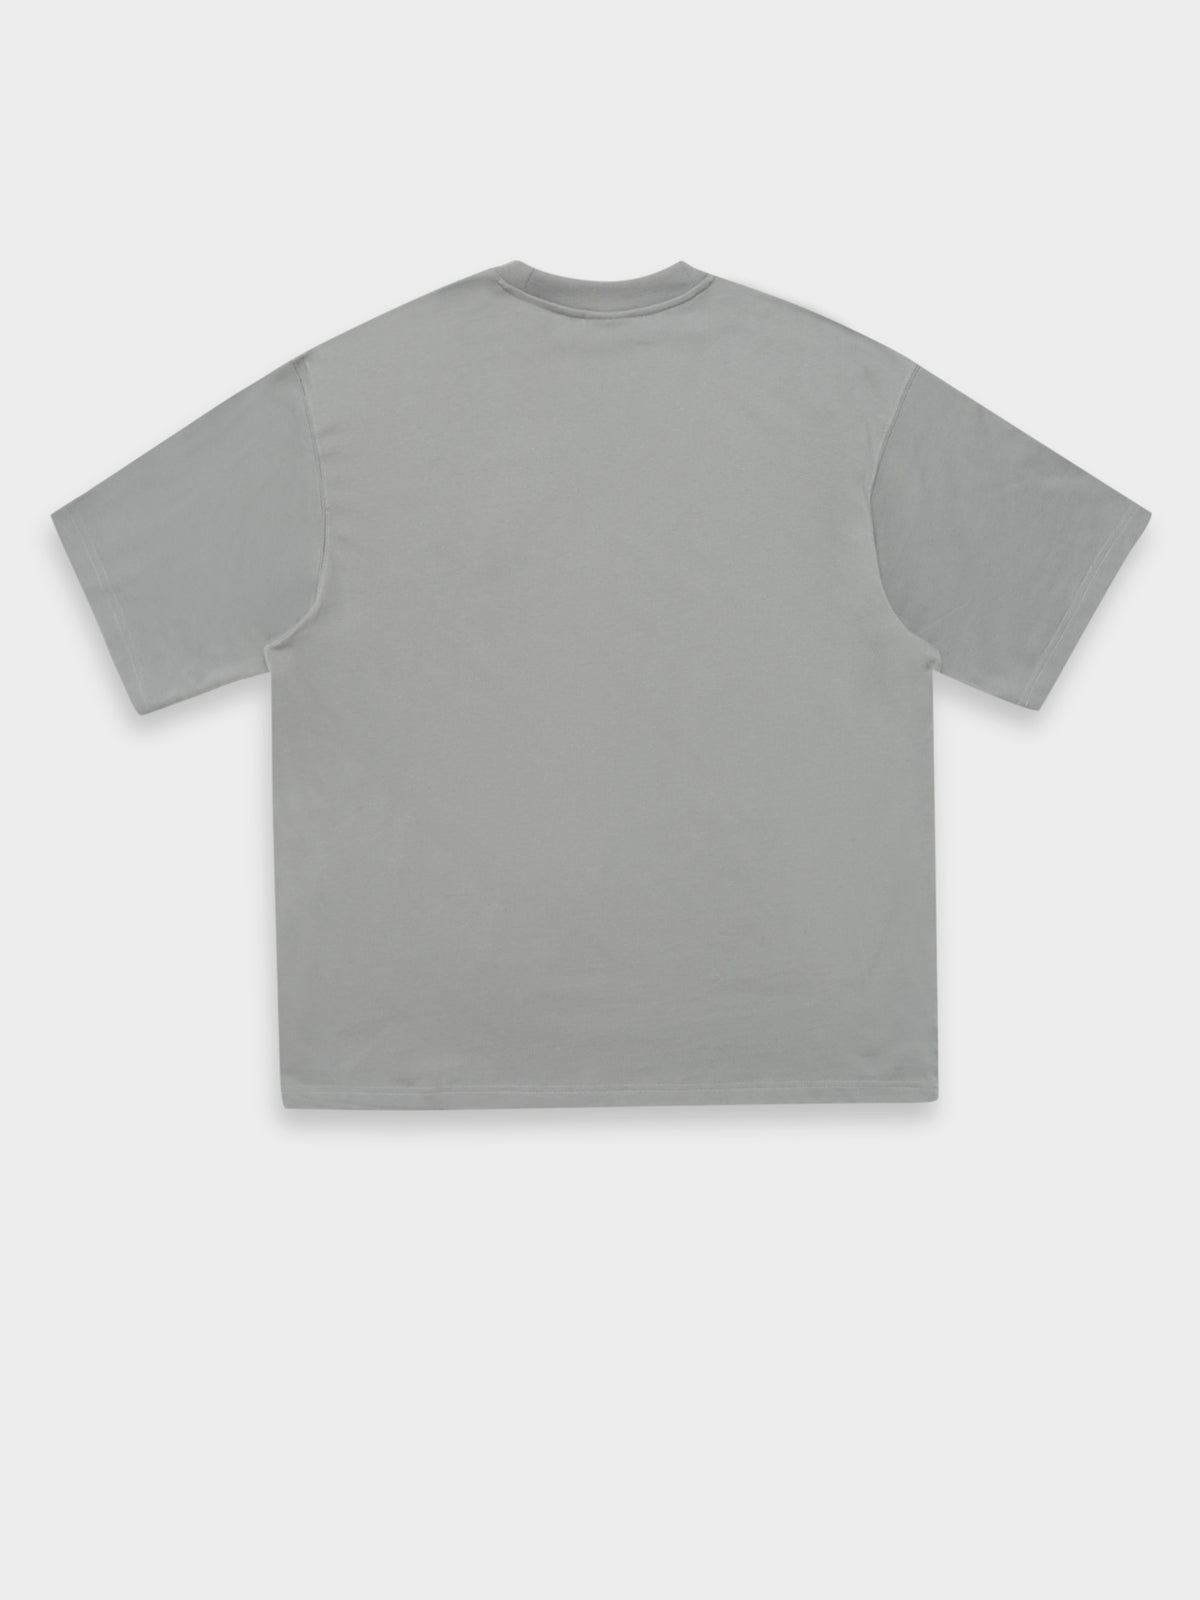 Trefoil T-Shirt in Grey Three